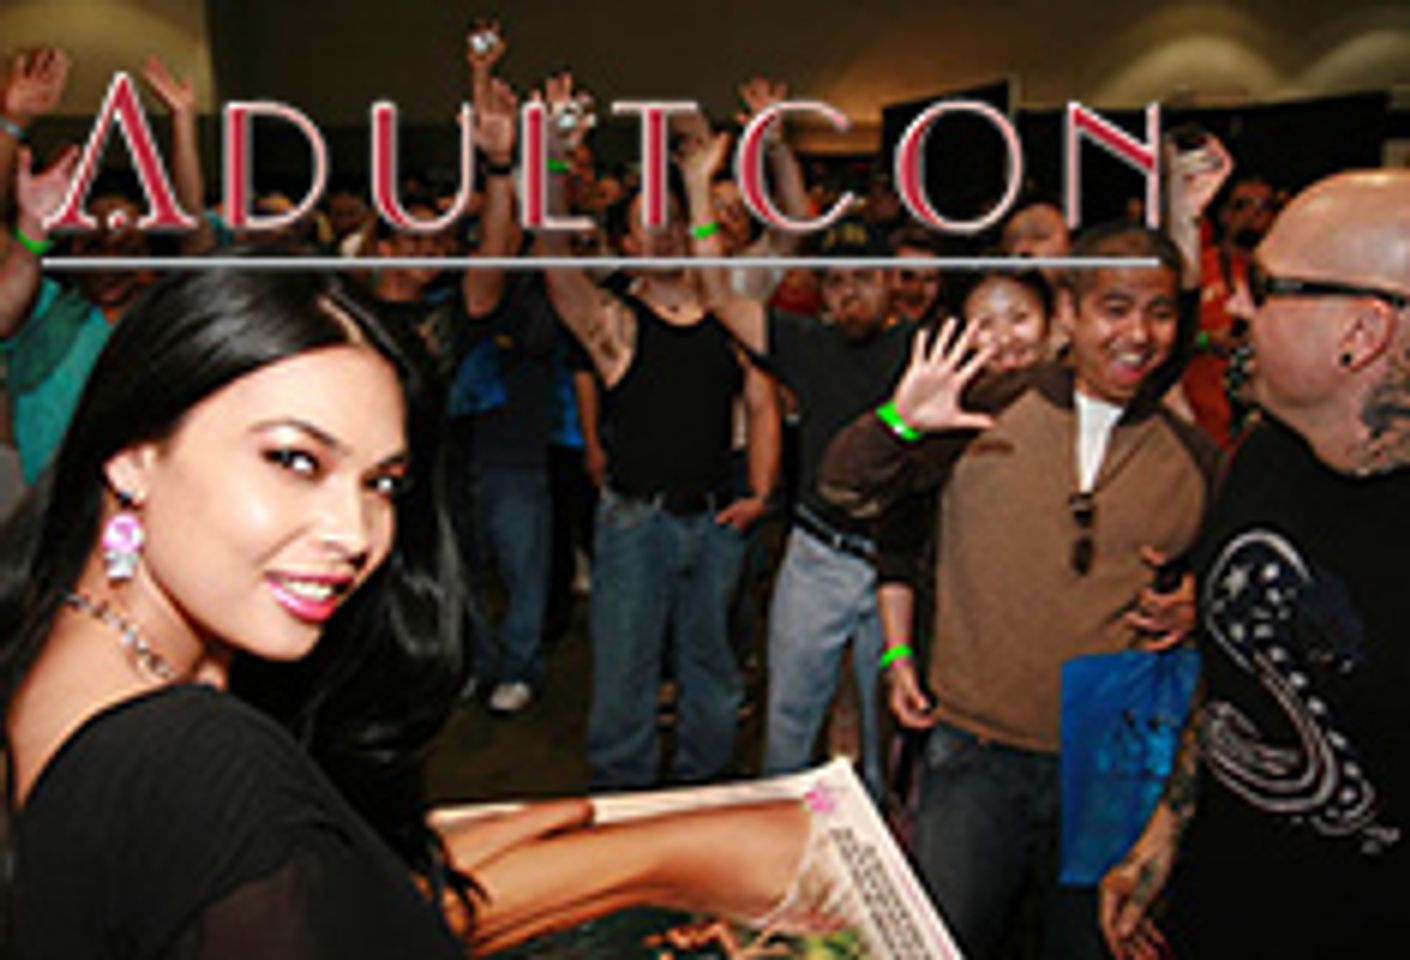 Adultcon Returns to LA Convention Center